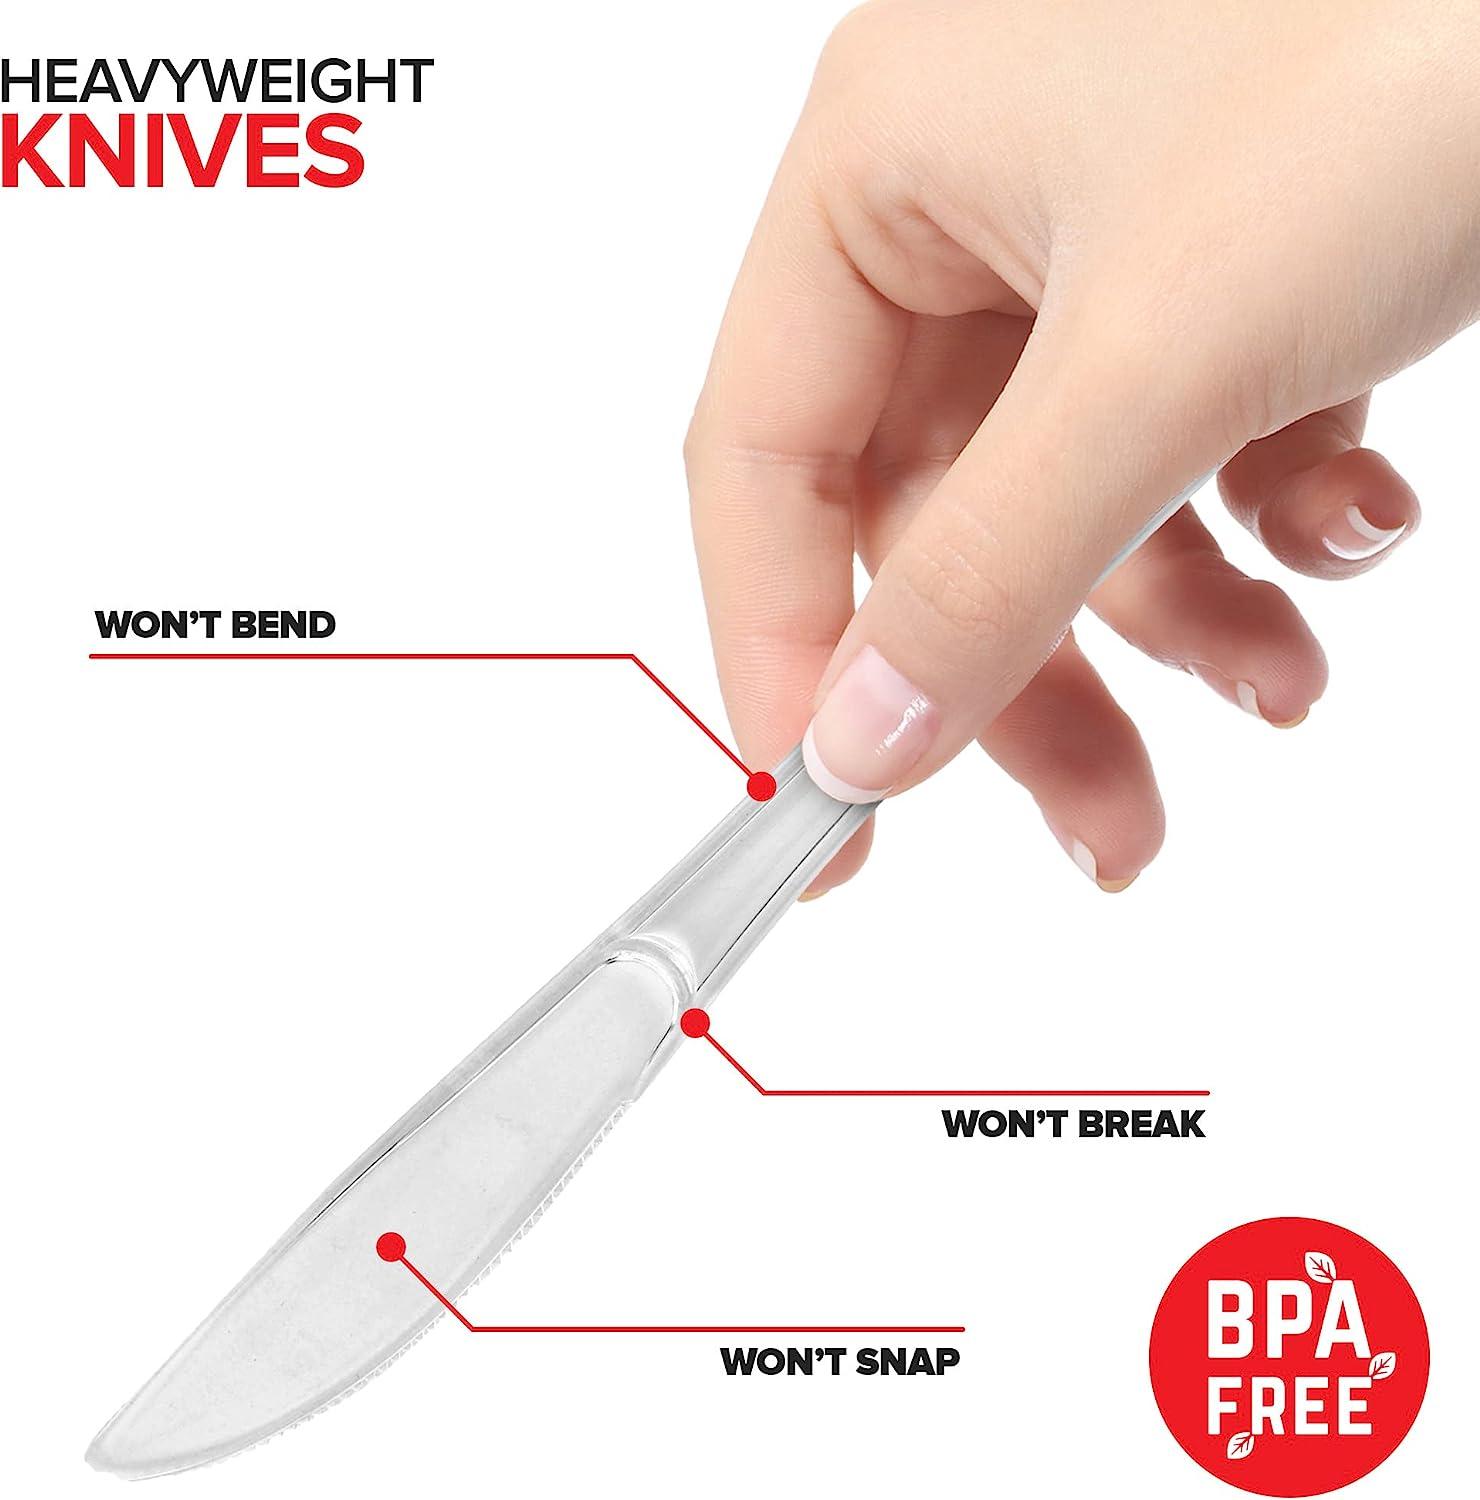 Wholesale plastic kitchen knives are Useful Kitchen Utensils